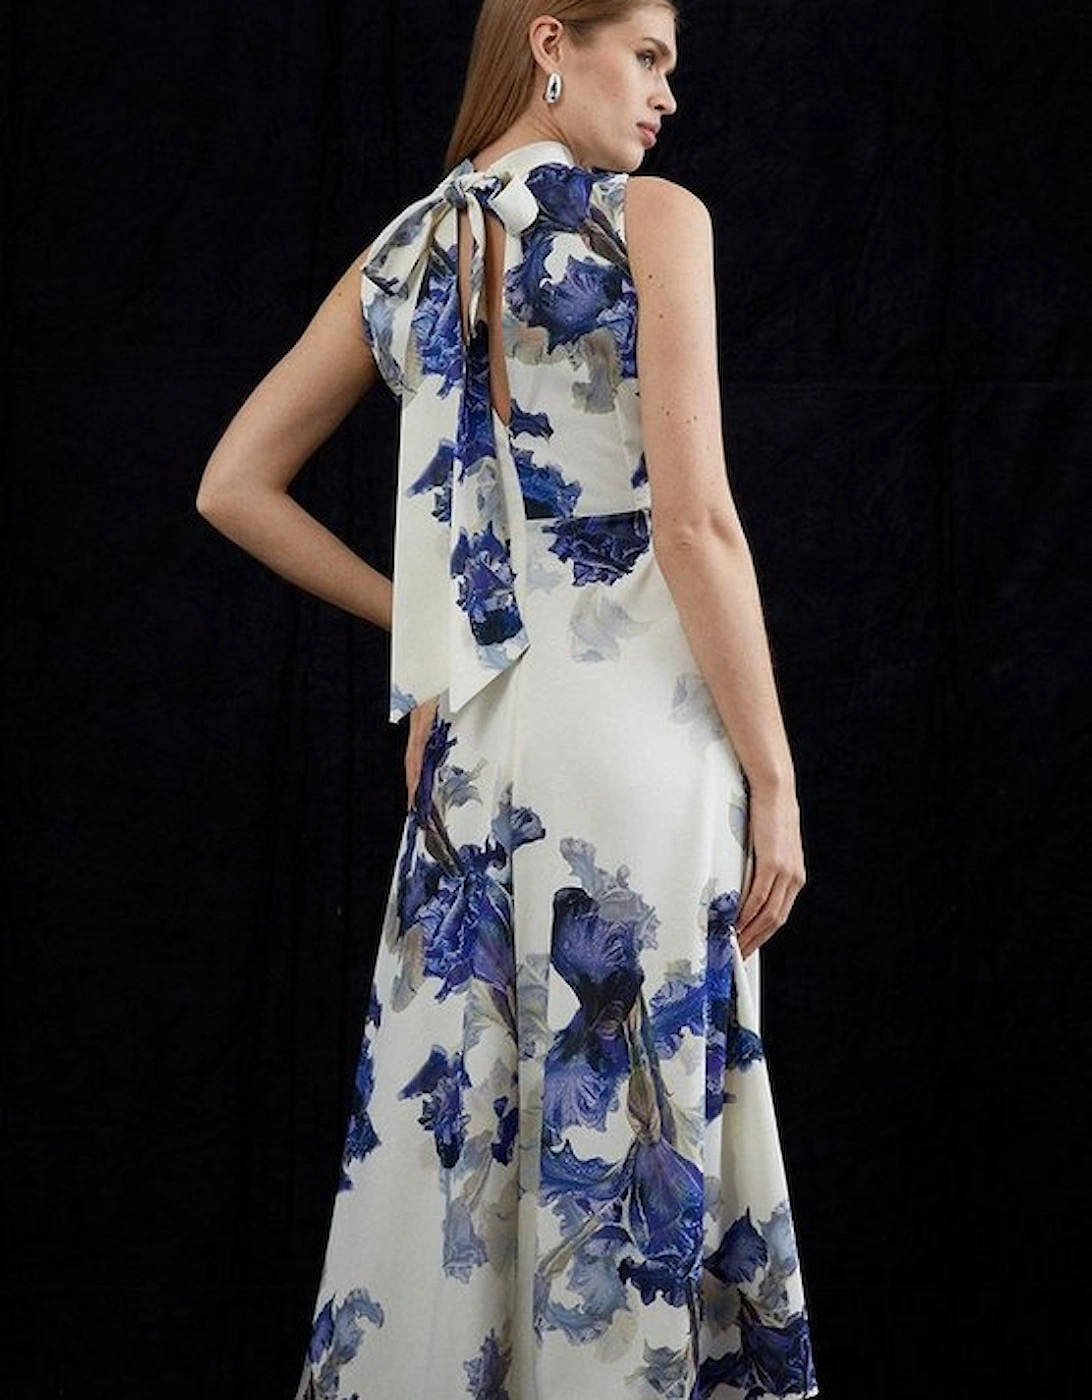 Tailored Crepe Floral Print Tie Neck Midi Dress